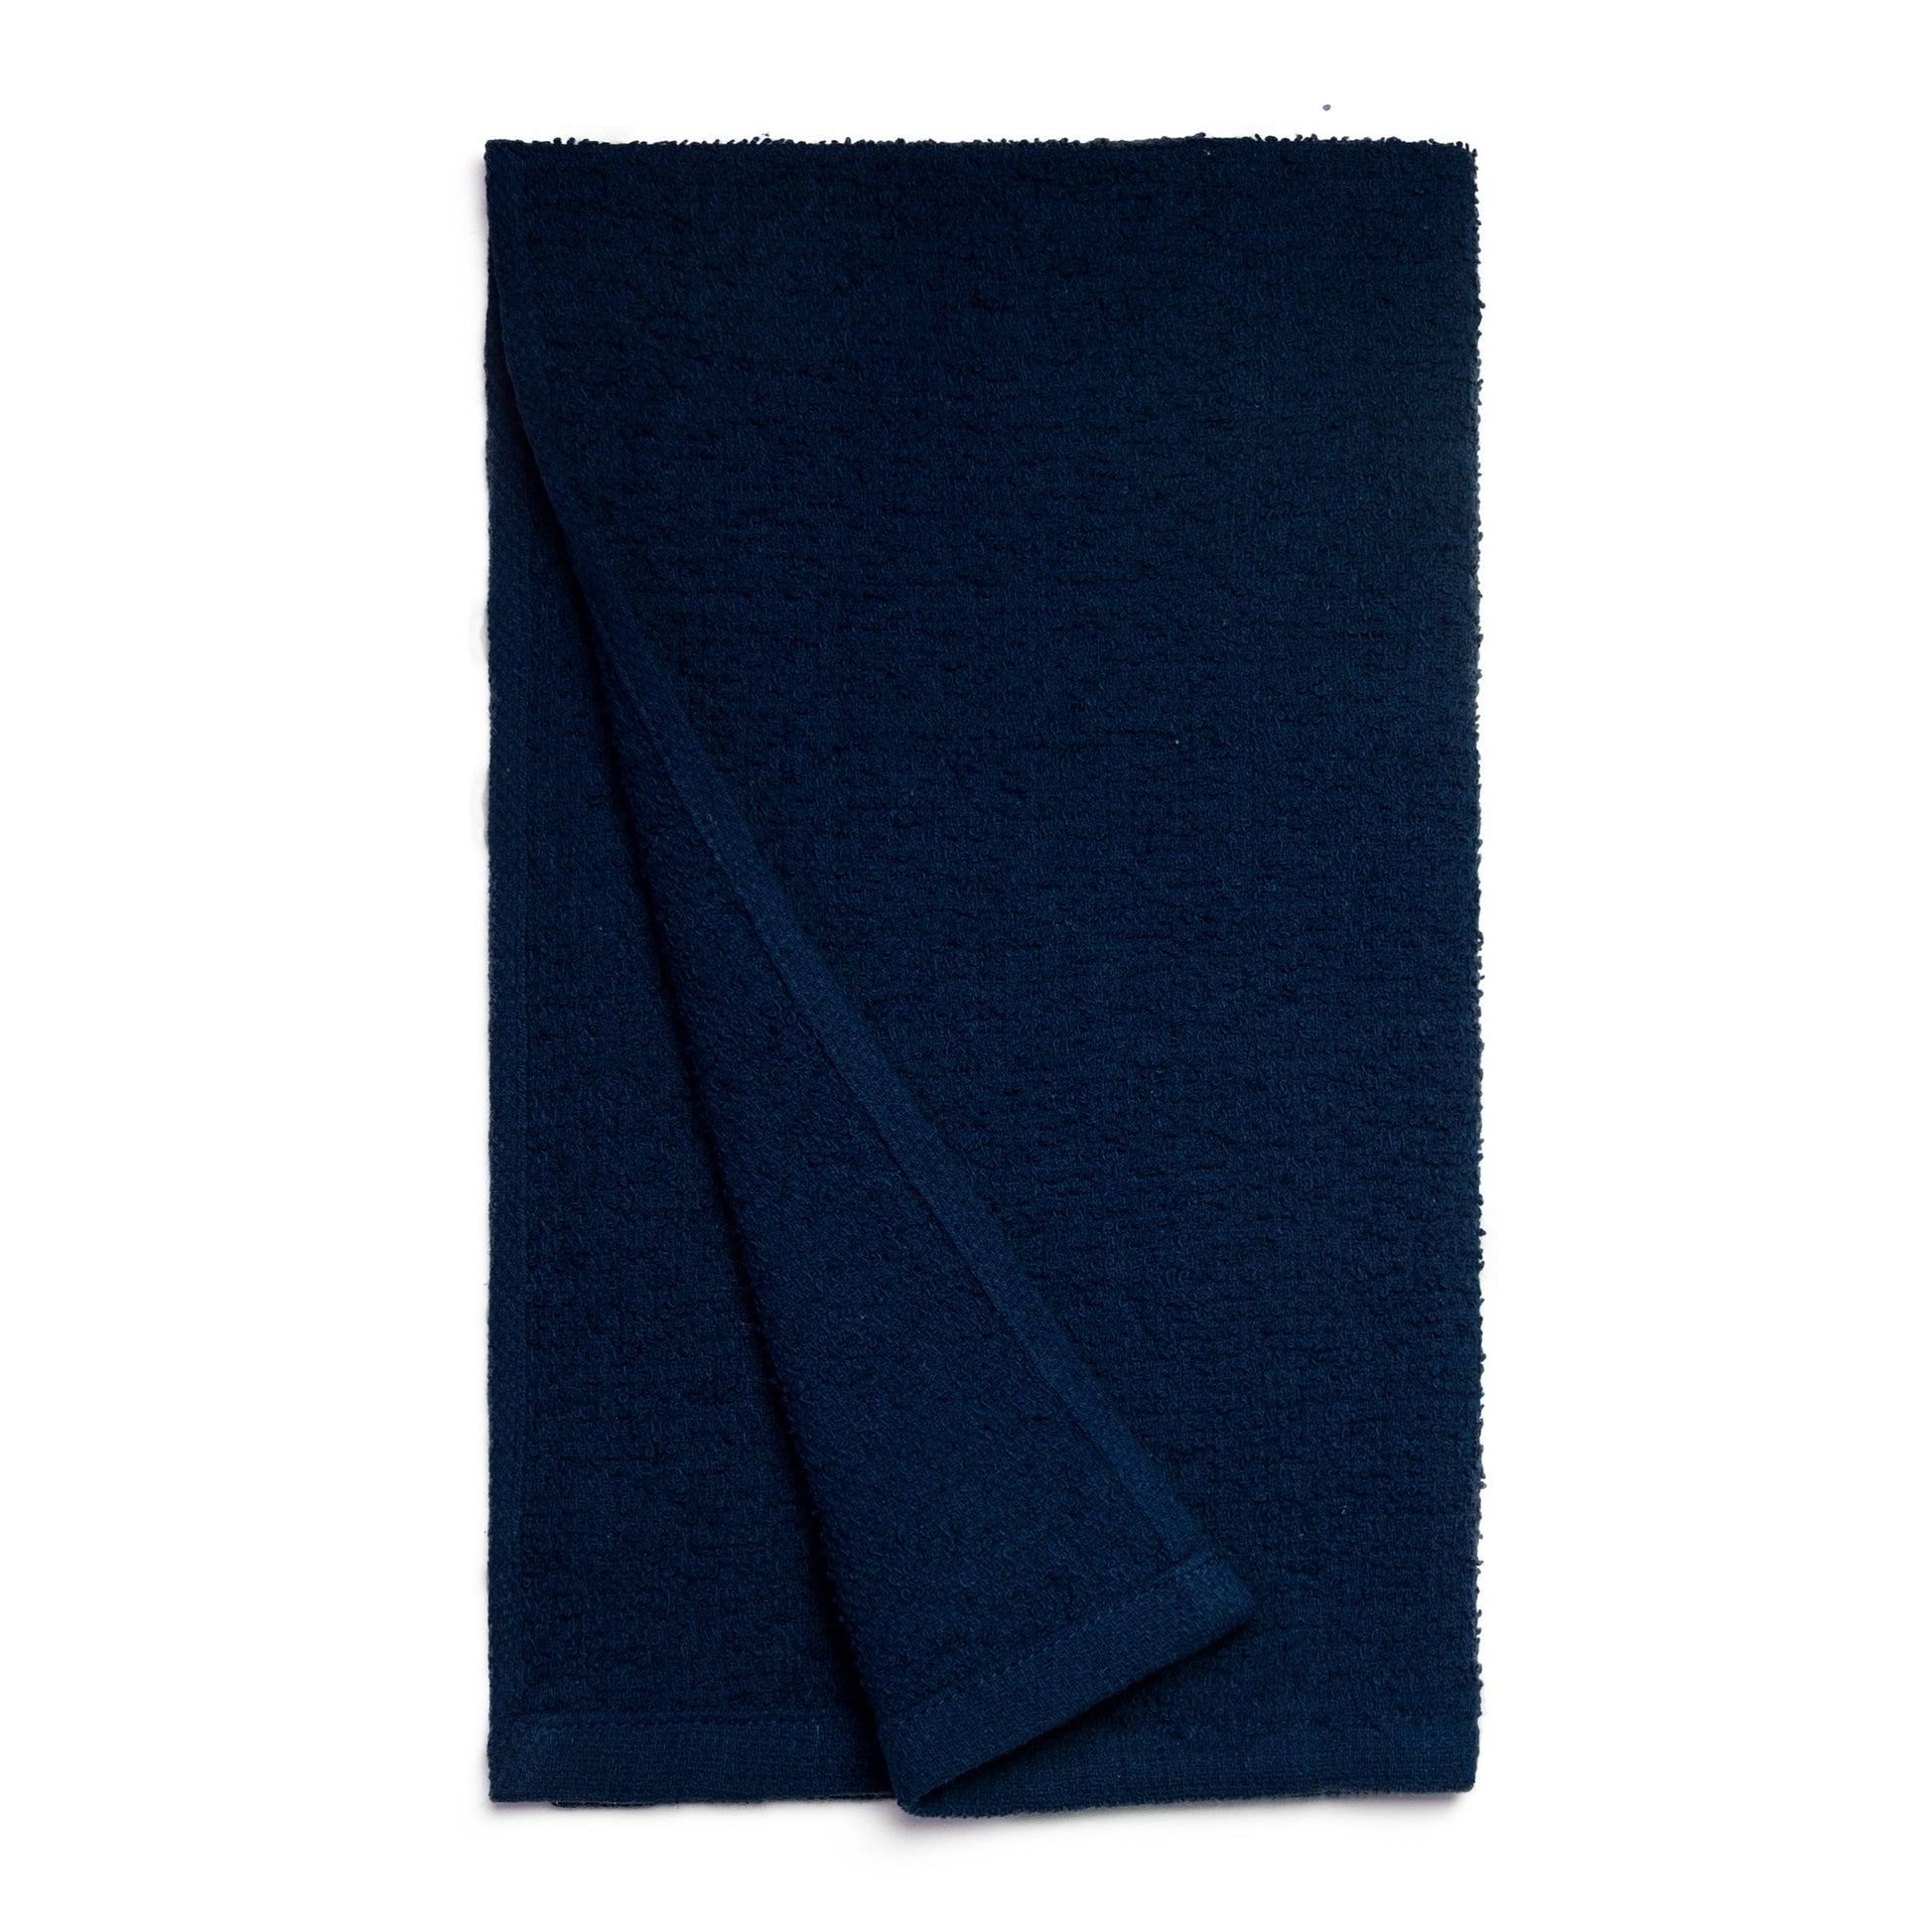 American Dawn | Dark Blue 15X25 Inch Econo Neo Salon Towels